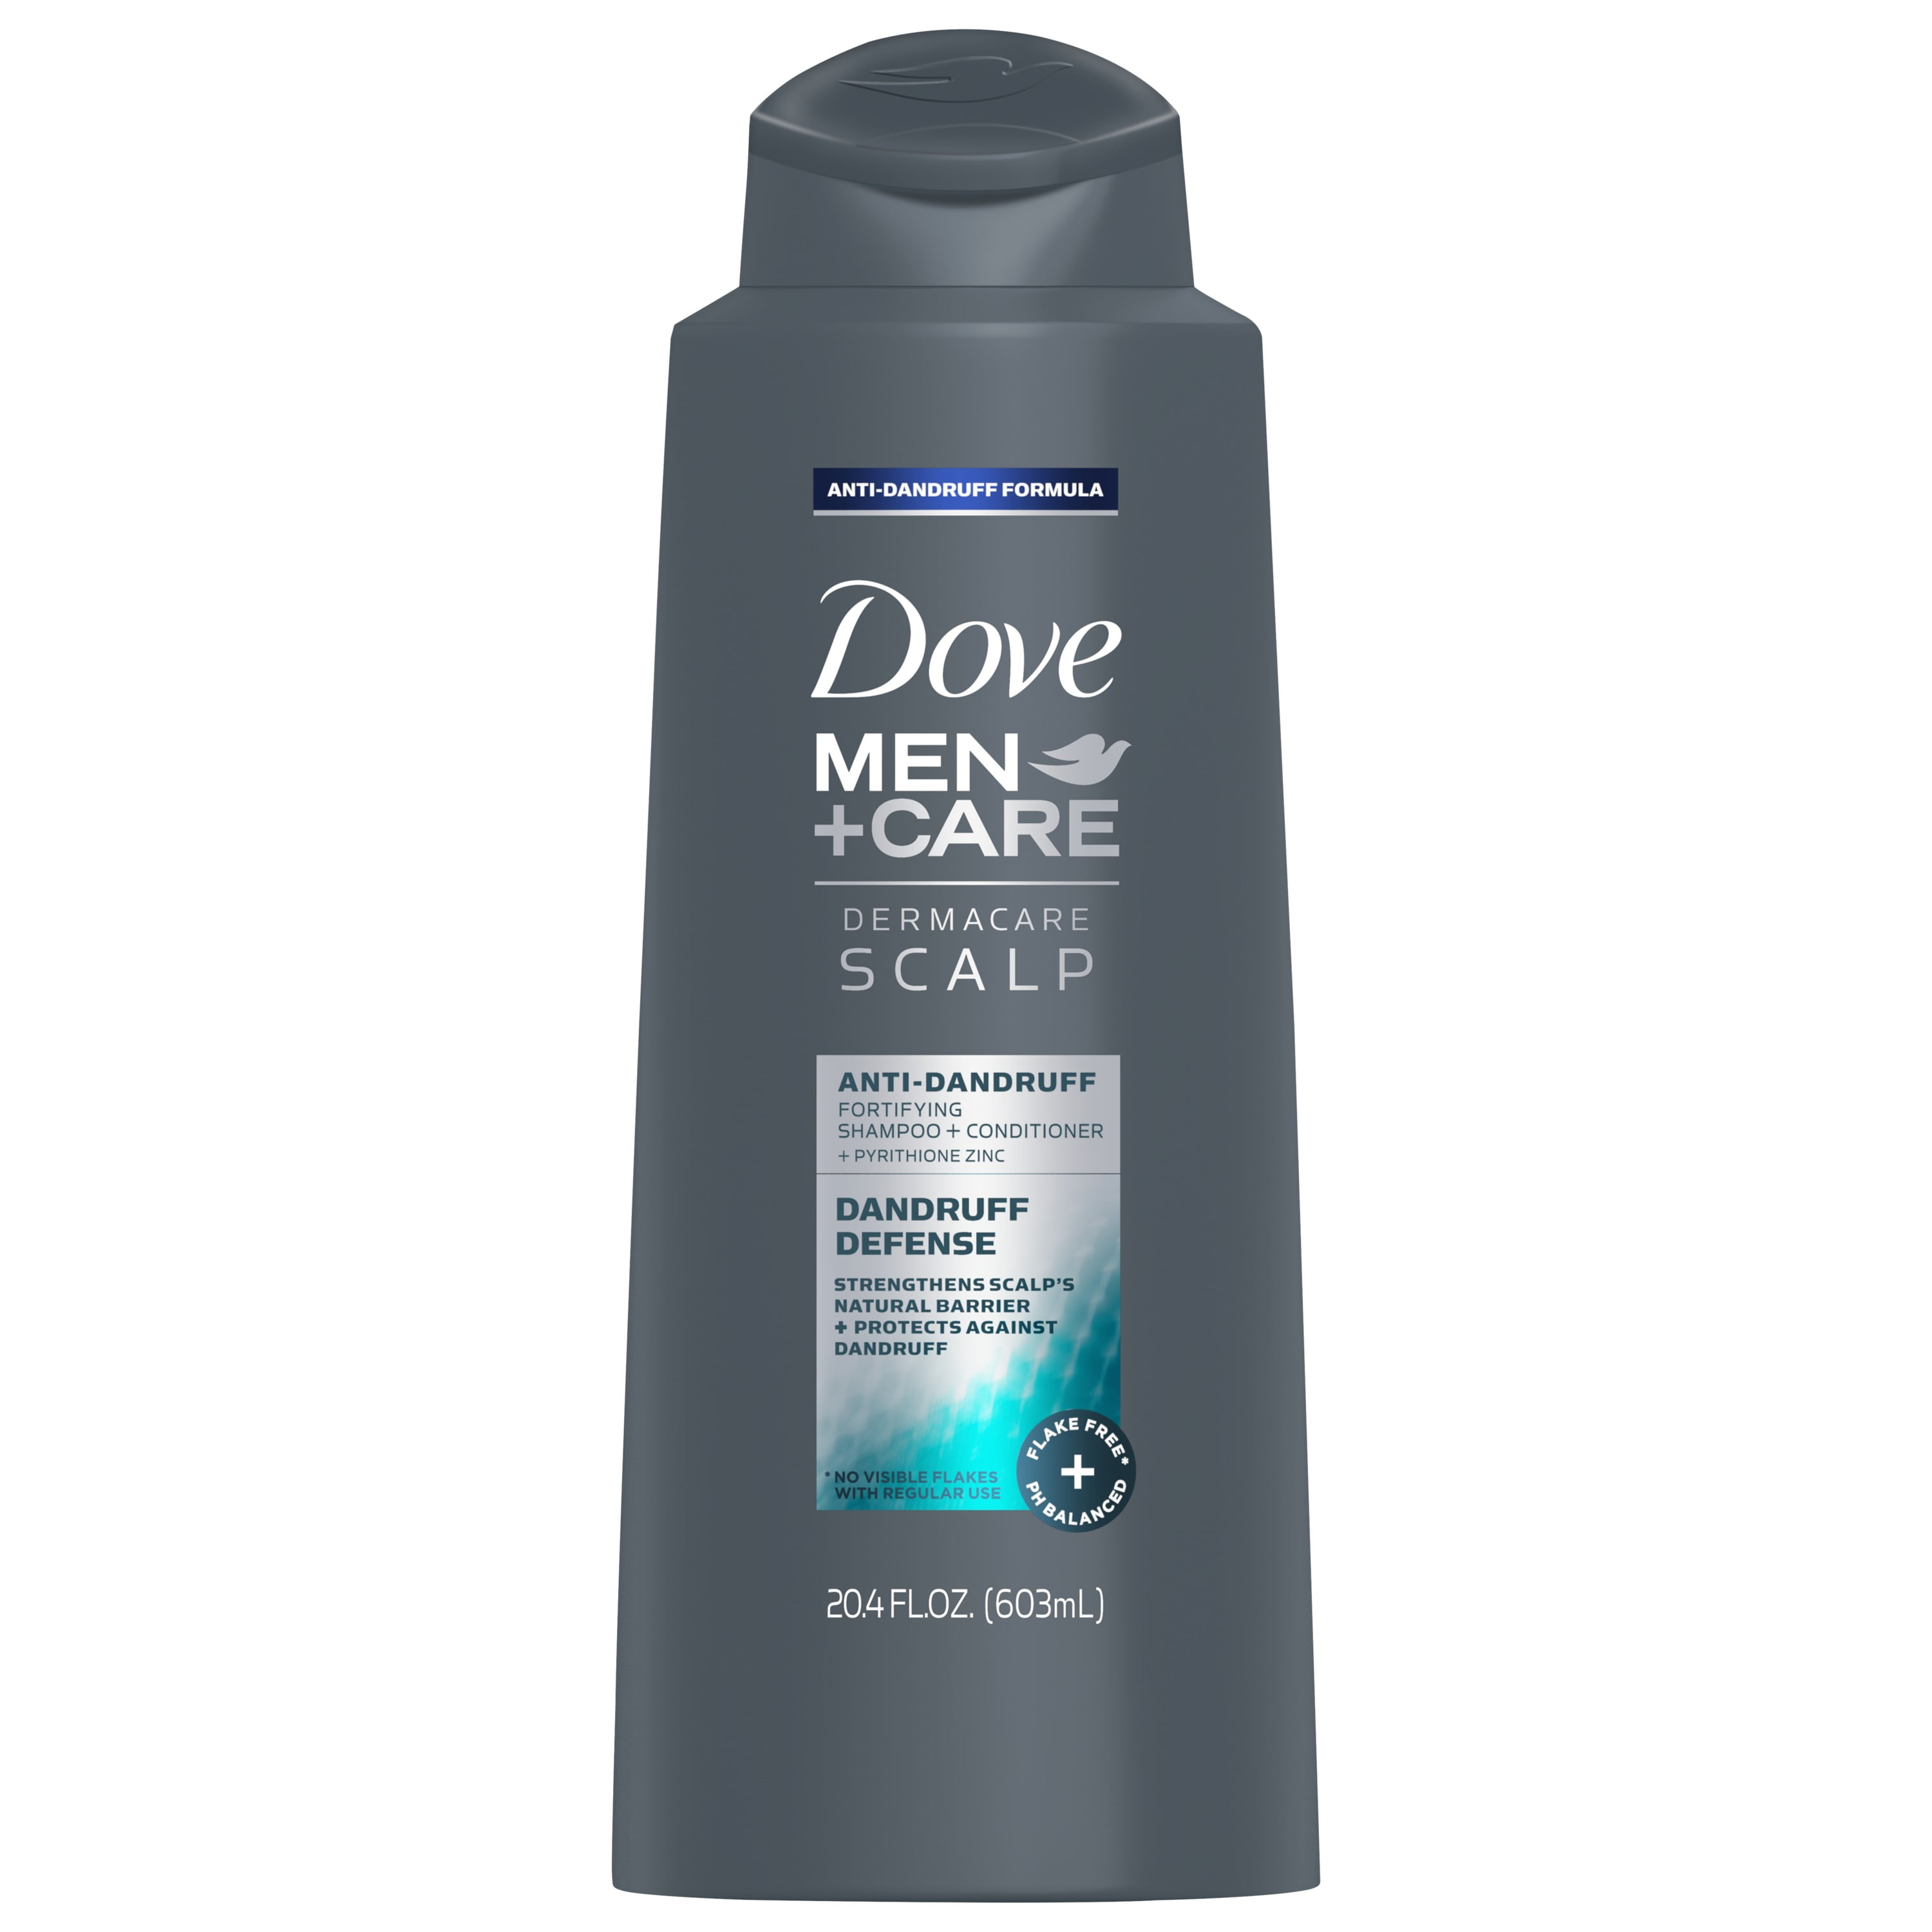 Dove Men+Care DermaCare Scalp Anti-Dandruff Shampoo 20.4 fl oz - Walmart.com